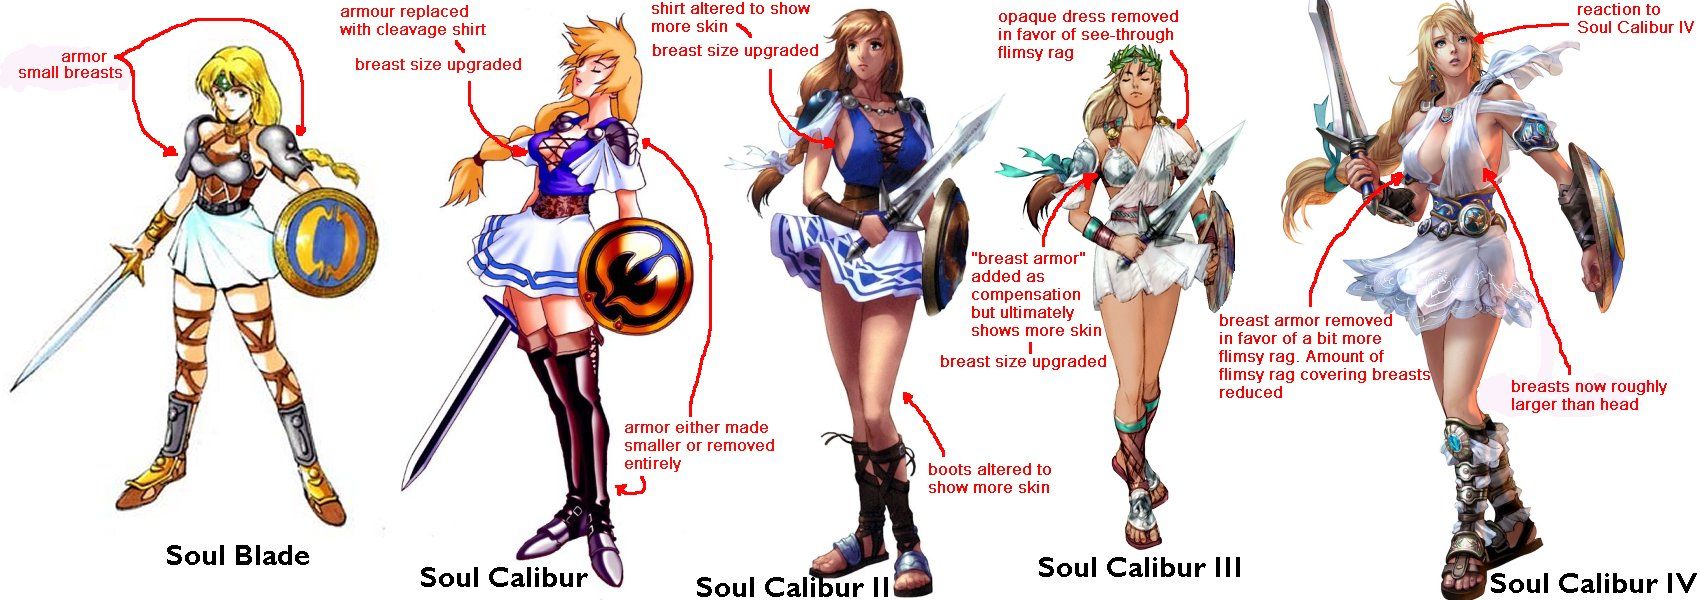 Soul Calibur 4/5 Breast Size image - Maxen1416 - IndieDB